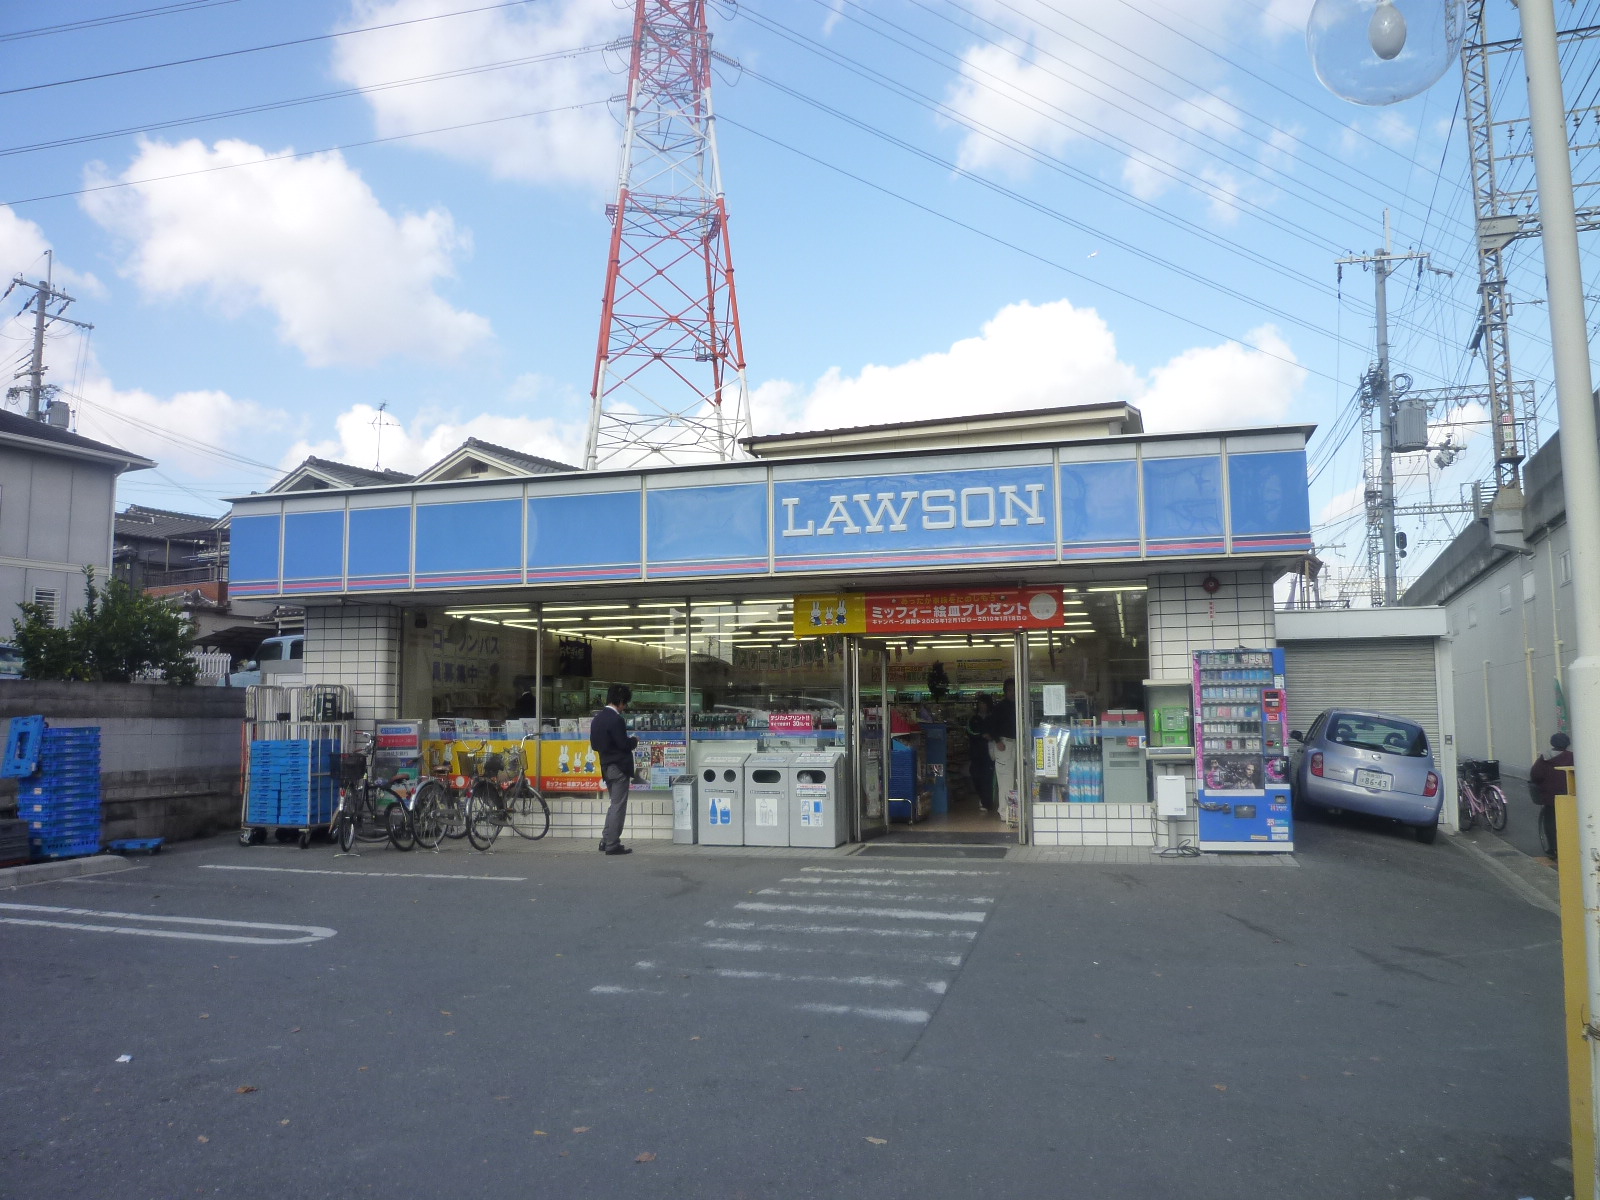 Convenience store. 520m until Lawson Yao Onjikita the town store (convenience store)